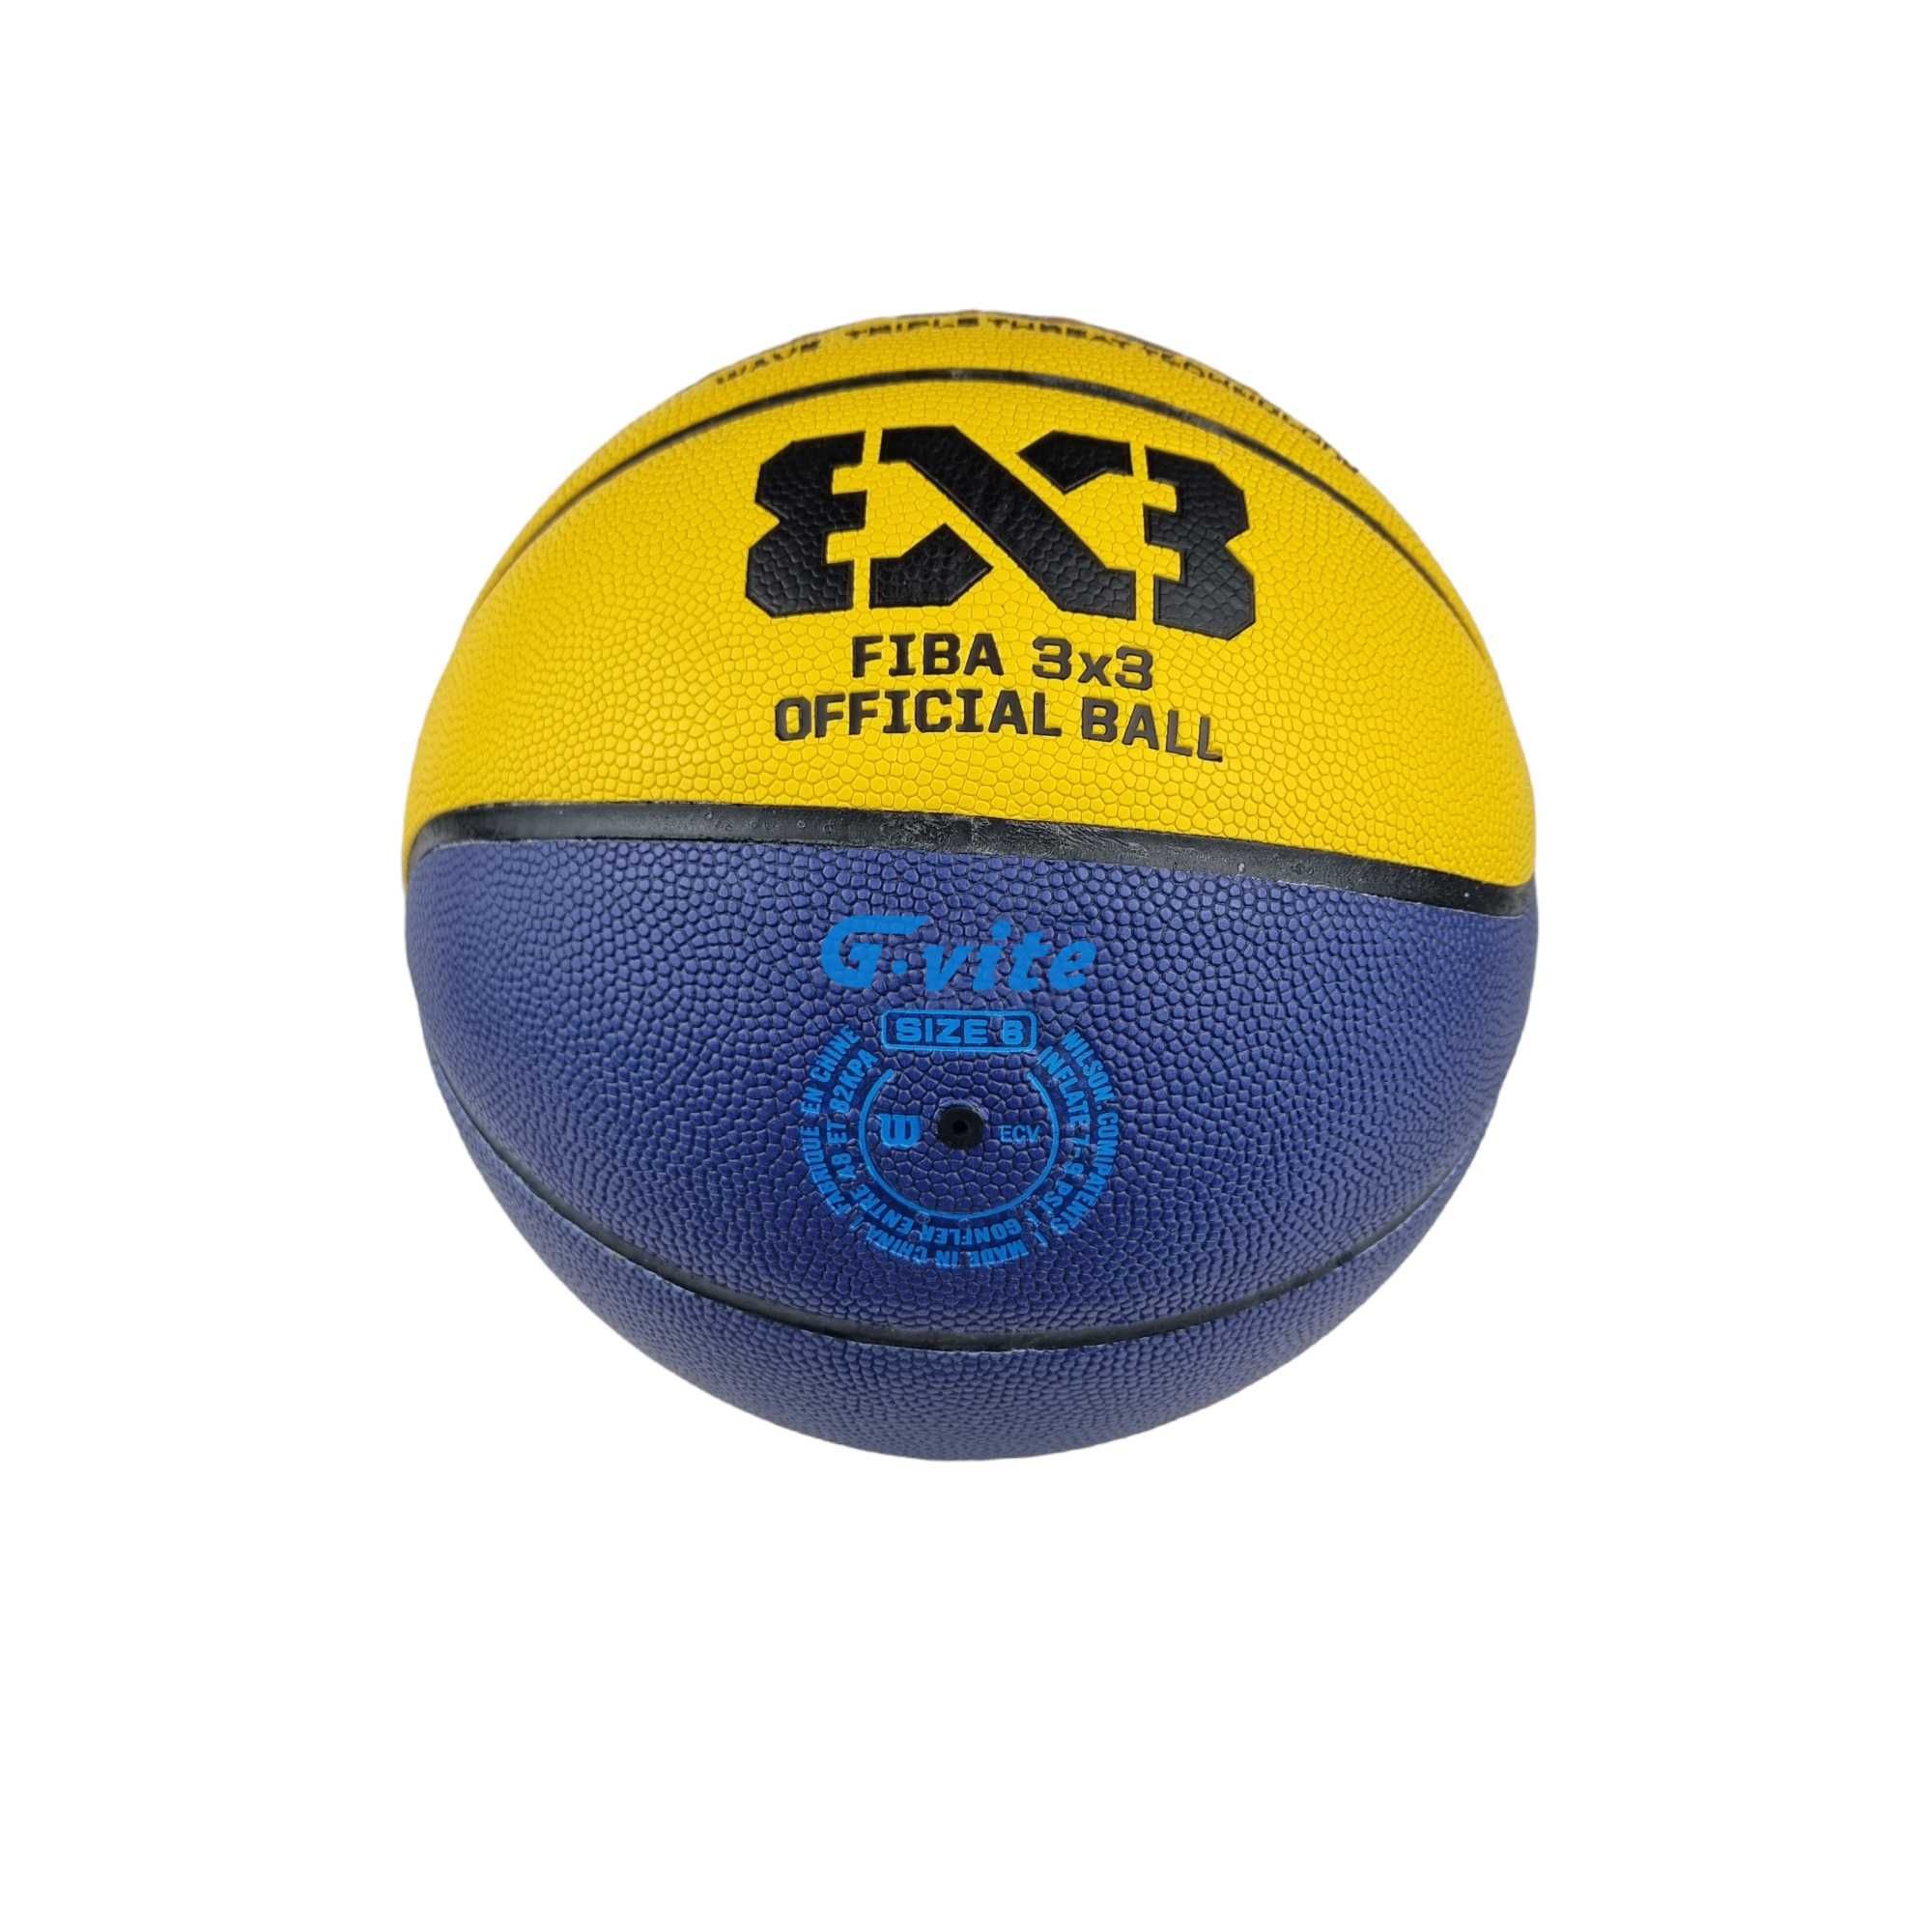 Баскетбольный мяч 6 Wilson FIBA 3x3 OFFICIAL BALL